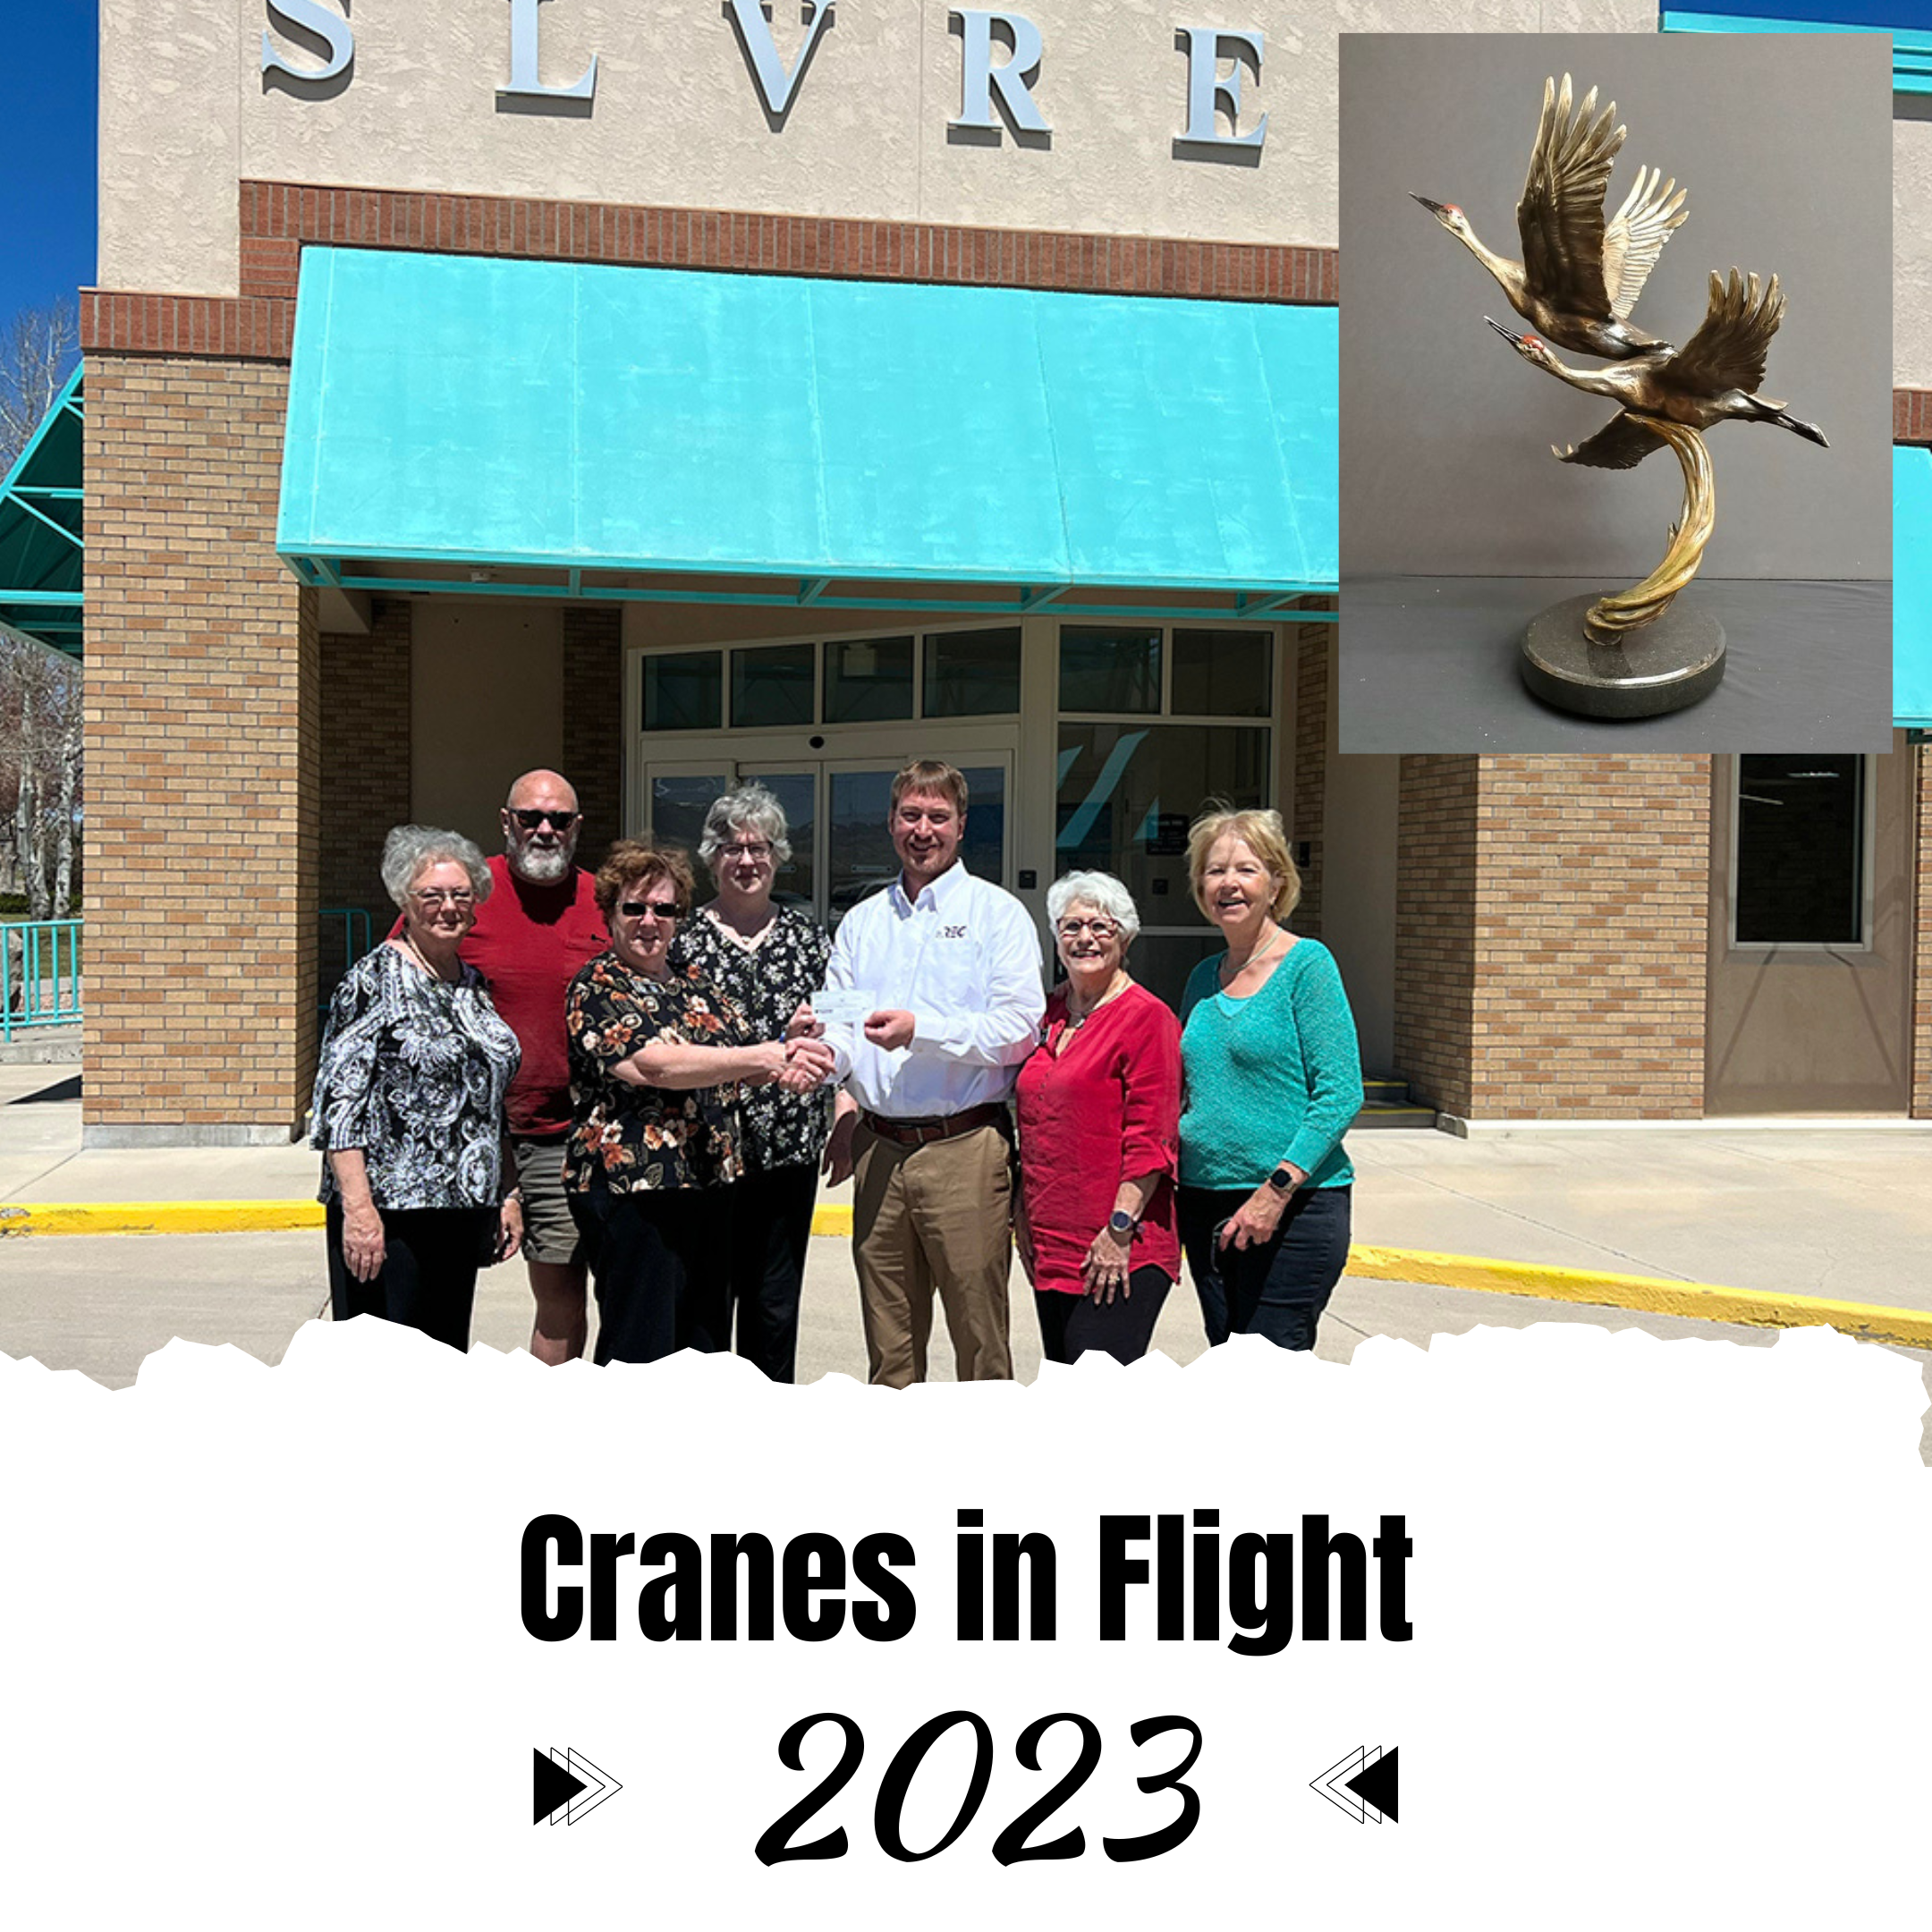 Cranes in Flight donation